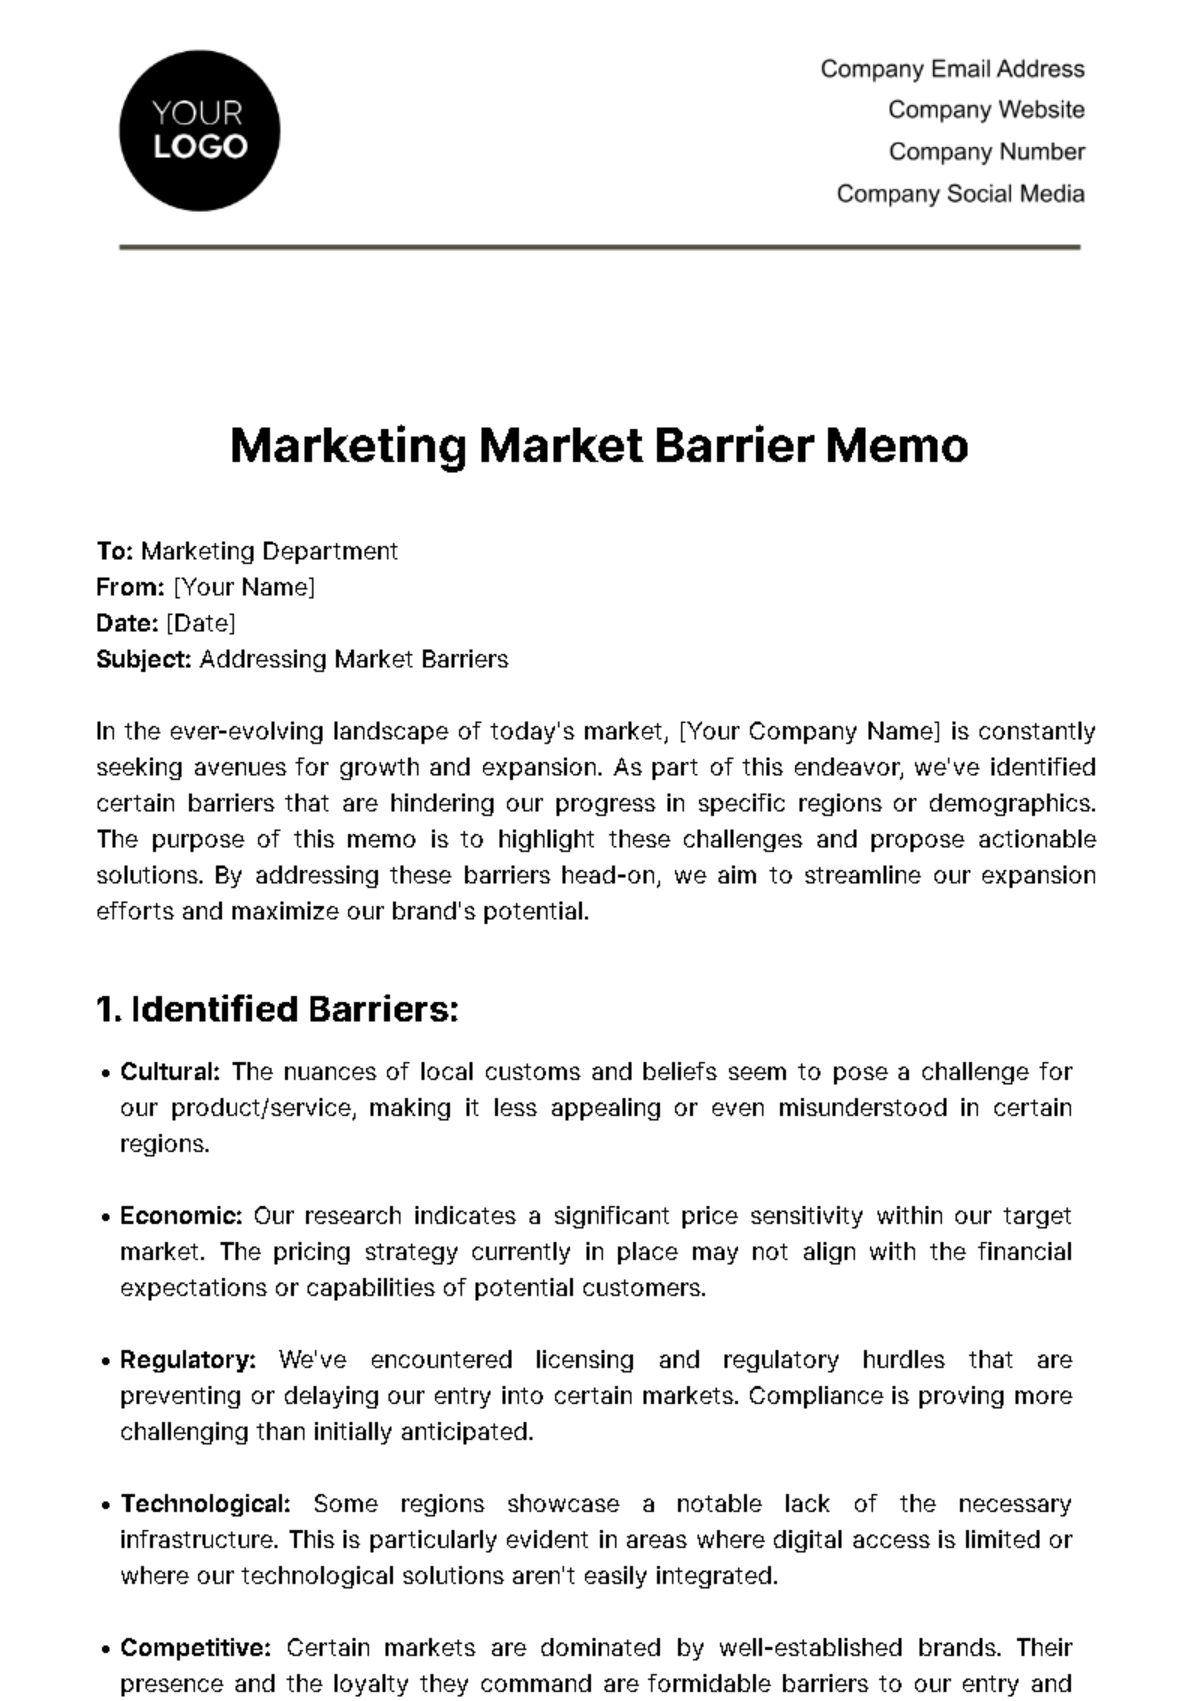 Marketing Market Barrier Memo Template